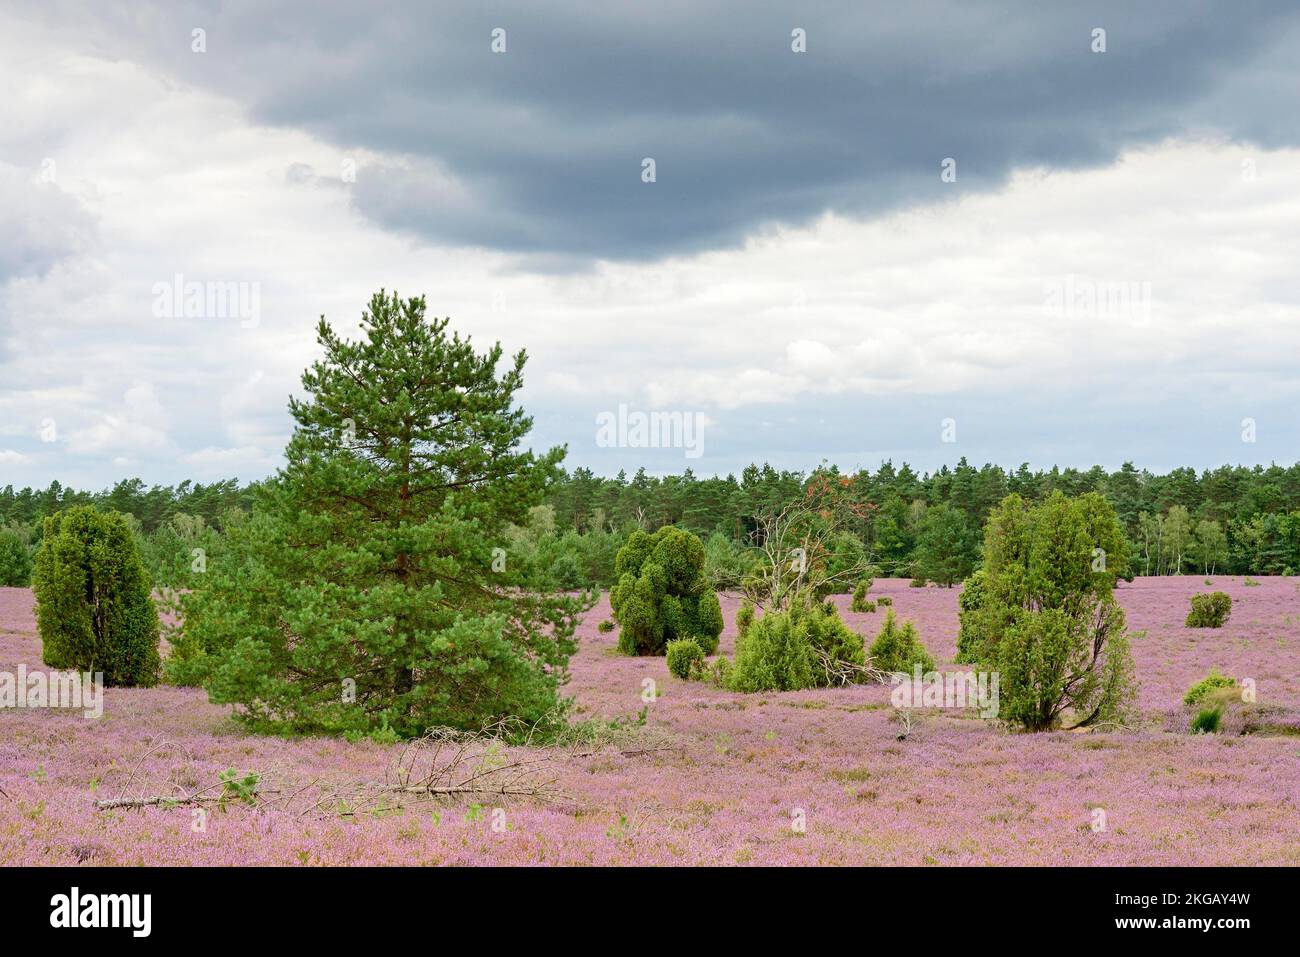 Heathland, Oberoher Heide, common juniper (Juniperus communis), pine (Pinus) and flowering common heather (Calluna Vulgaris), rainy sky, Südheide natu Stock Photo